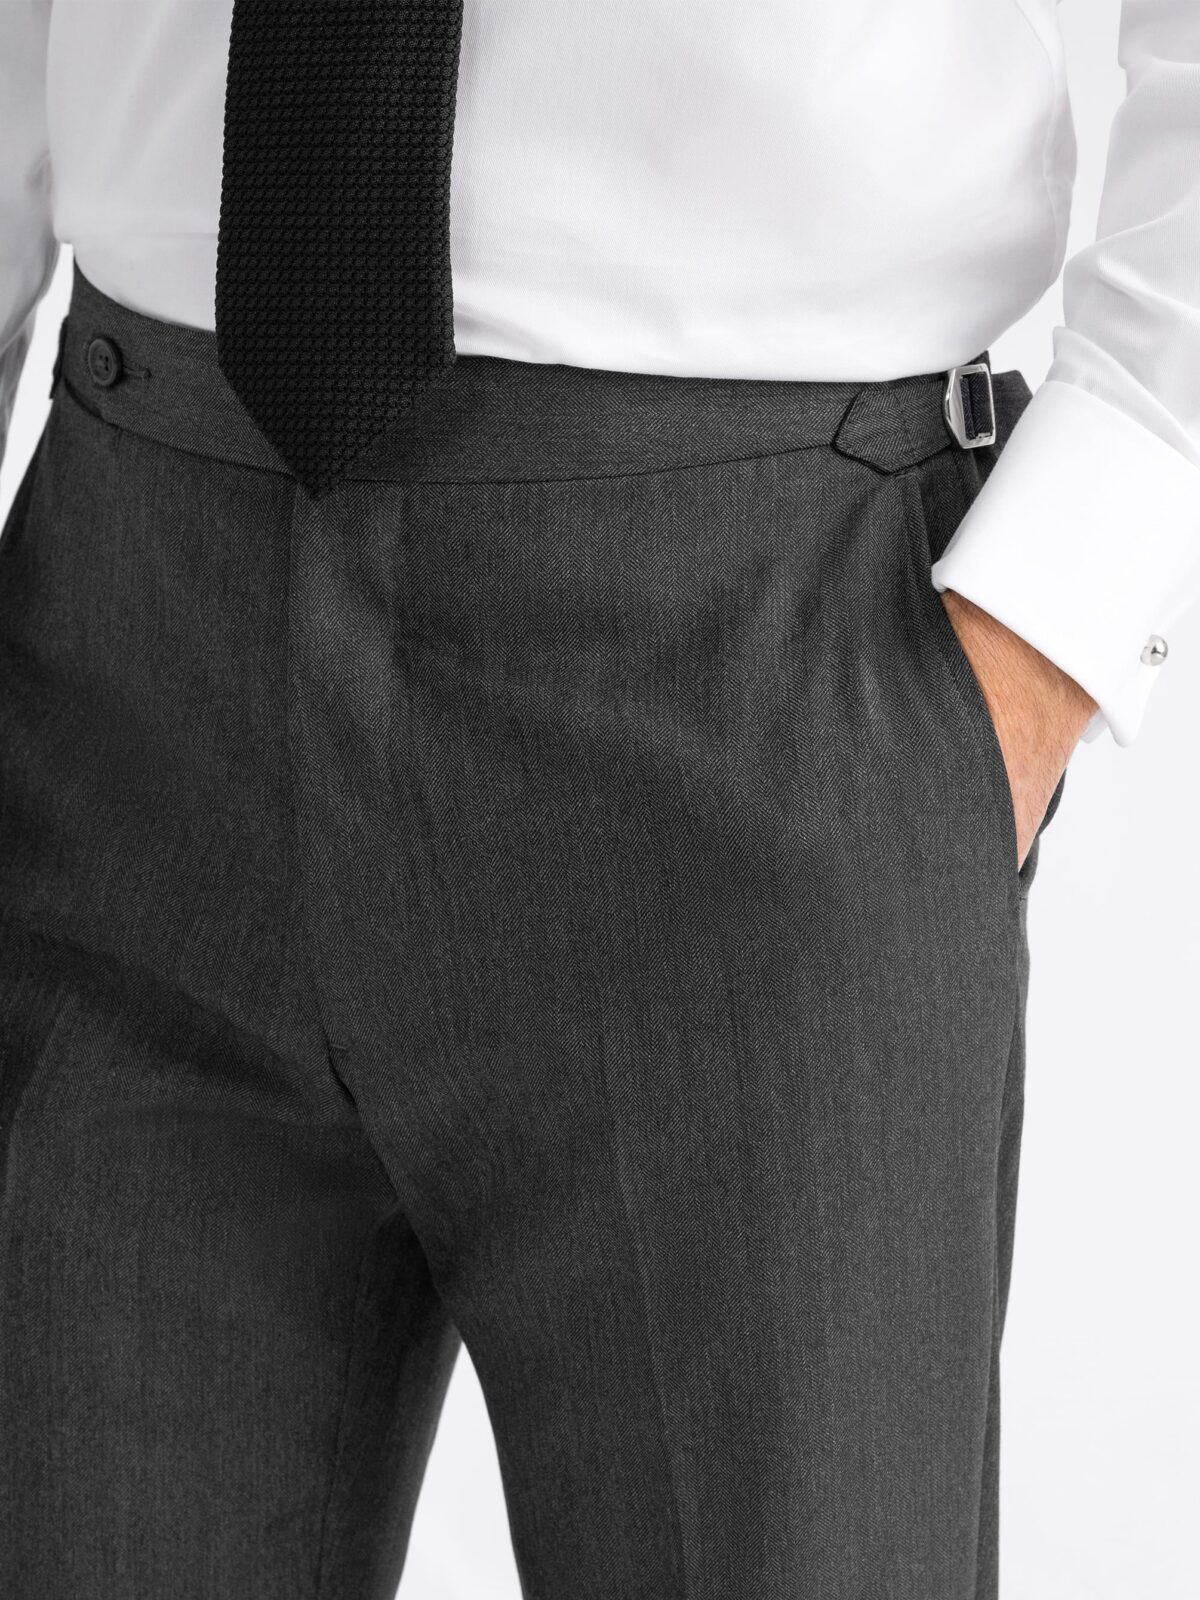 VBC Charcoal Herringbone Dress Pant - Custom Fit Tailored Clothing